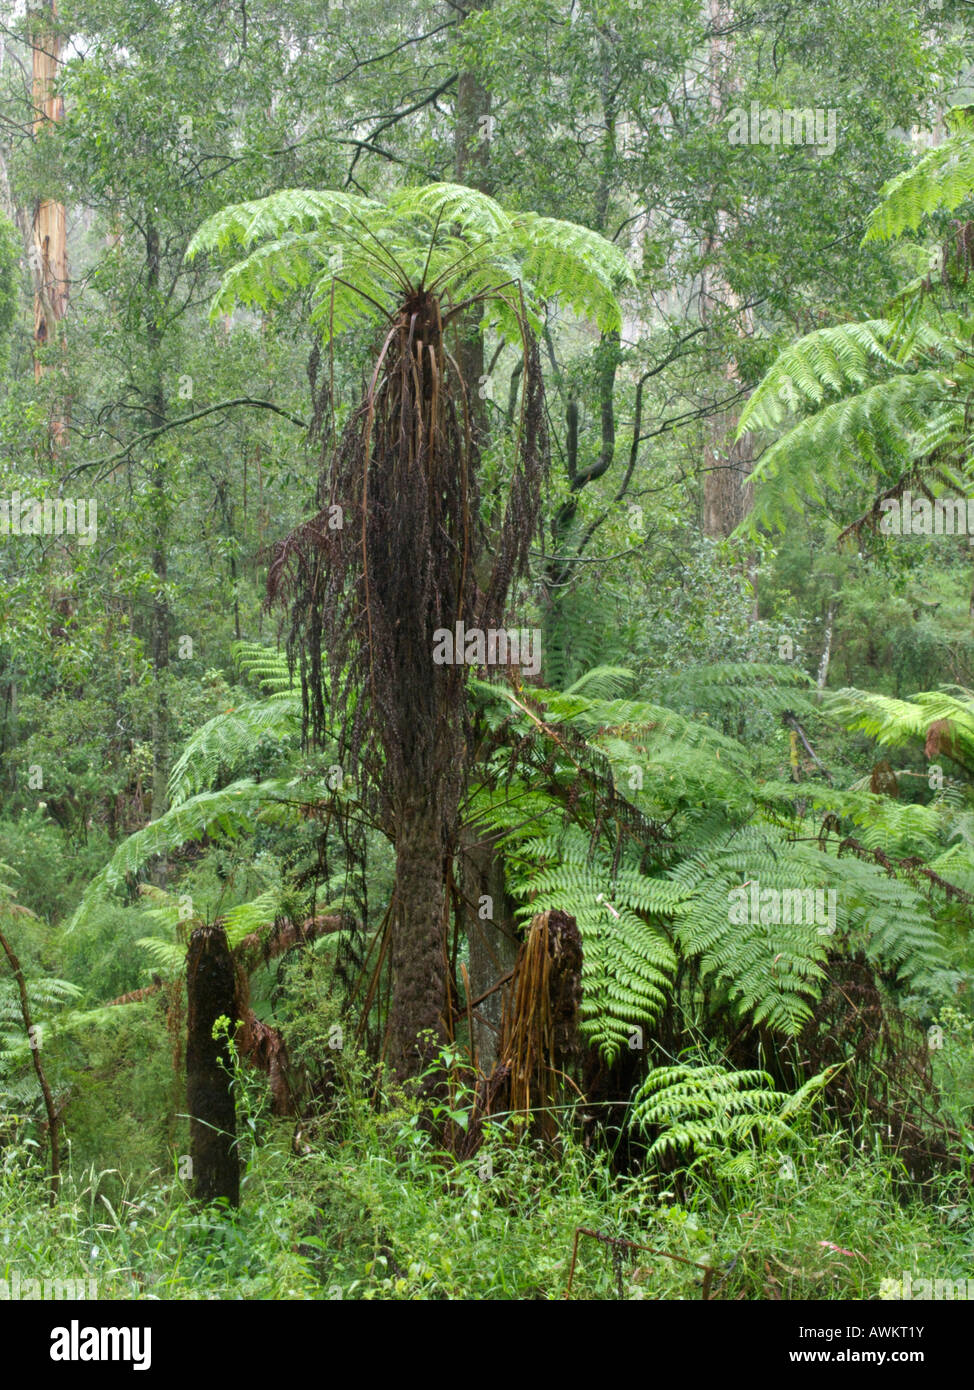 Tree fern (Dicksonia antarctica), Dandenong Ranges National Park, Melbourne, Australia Stock Photo